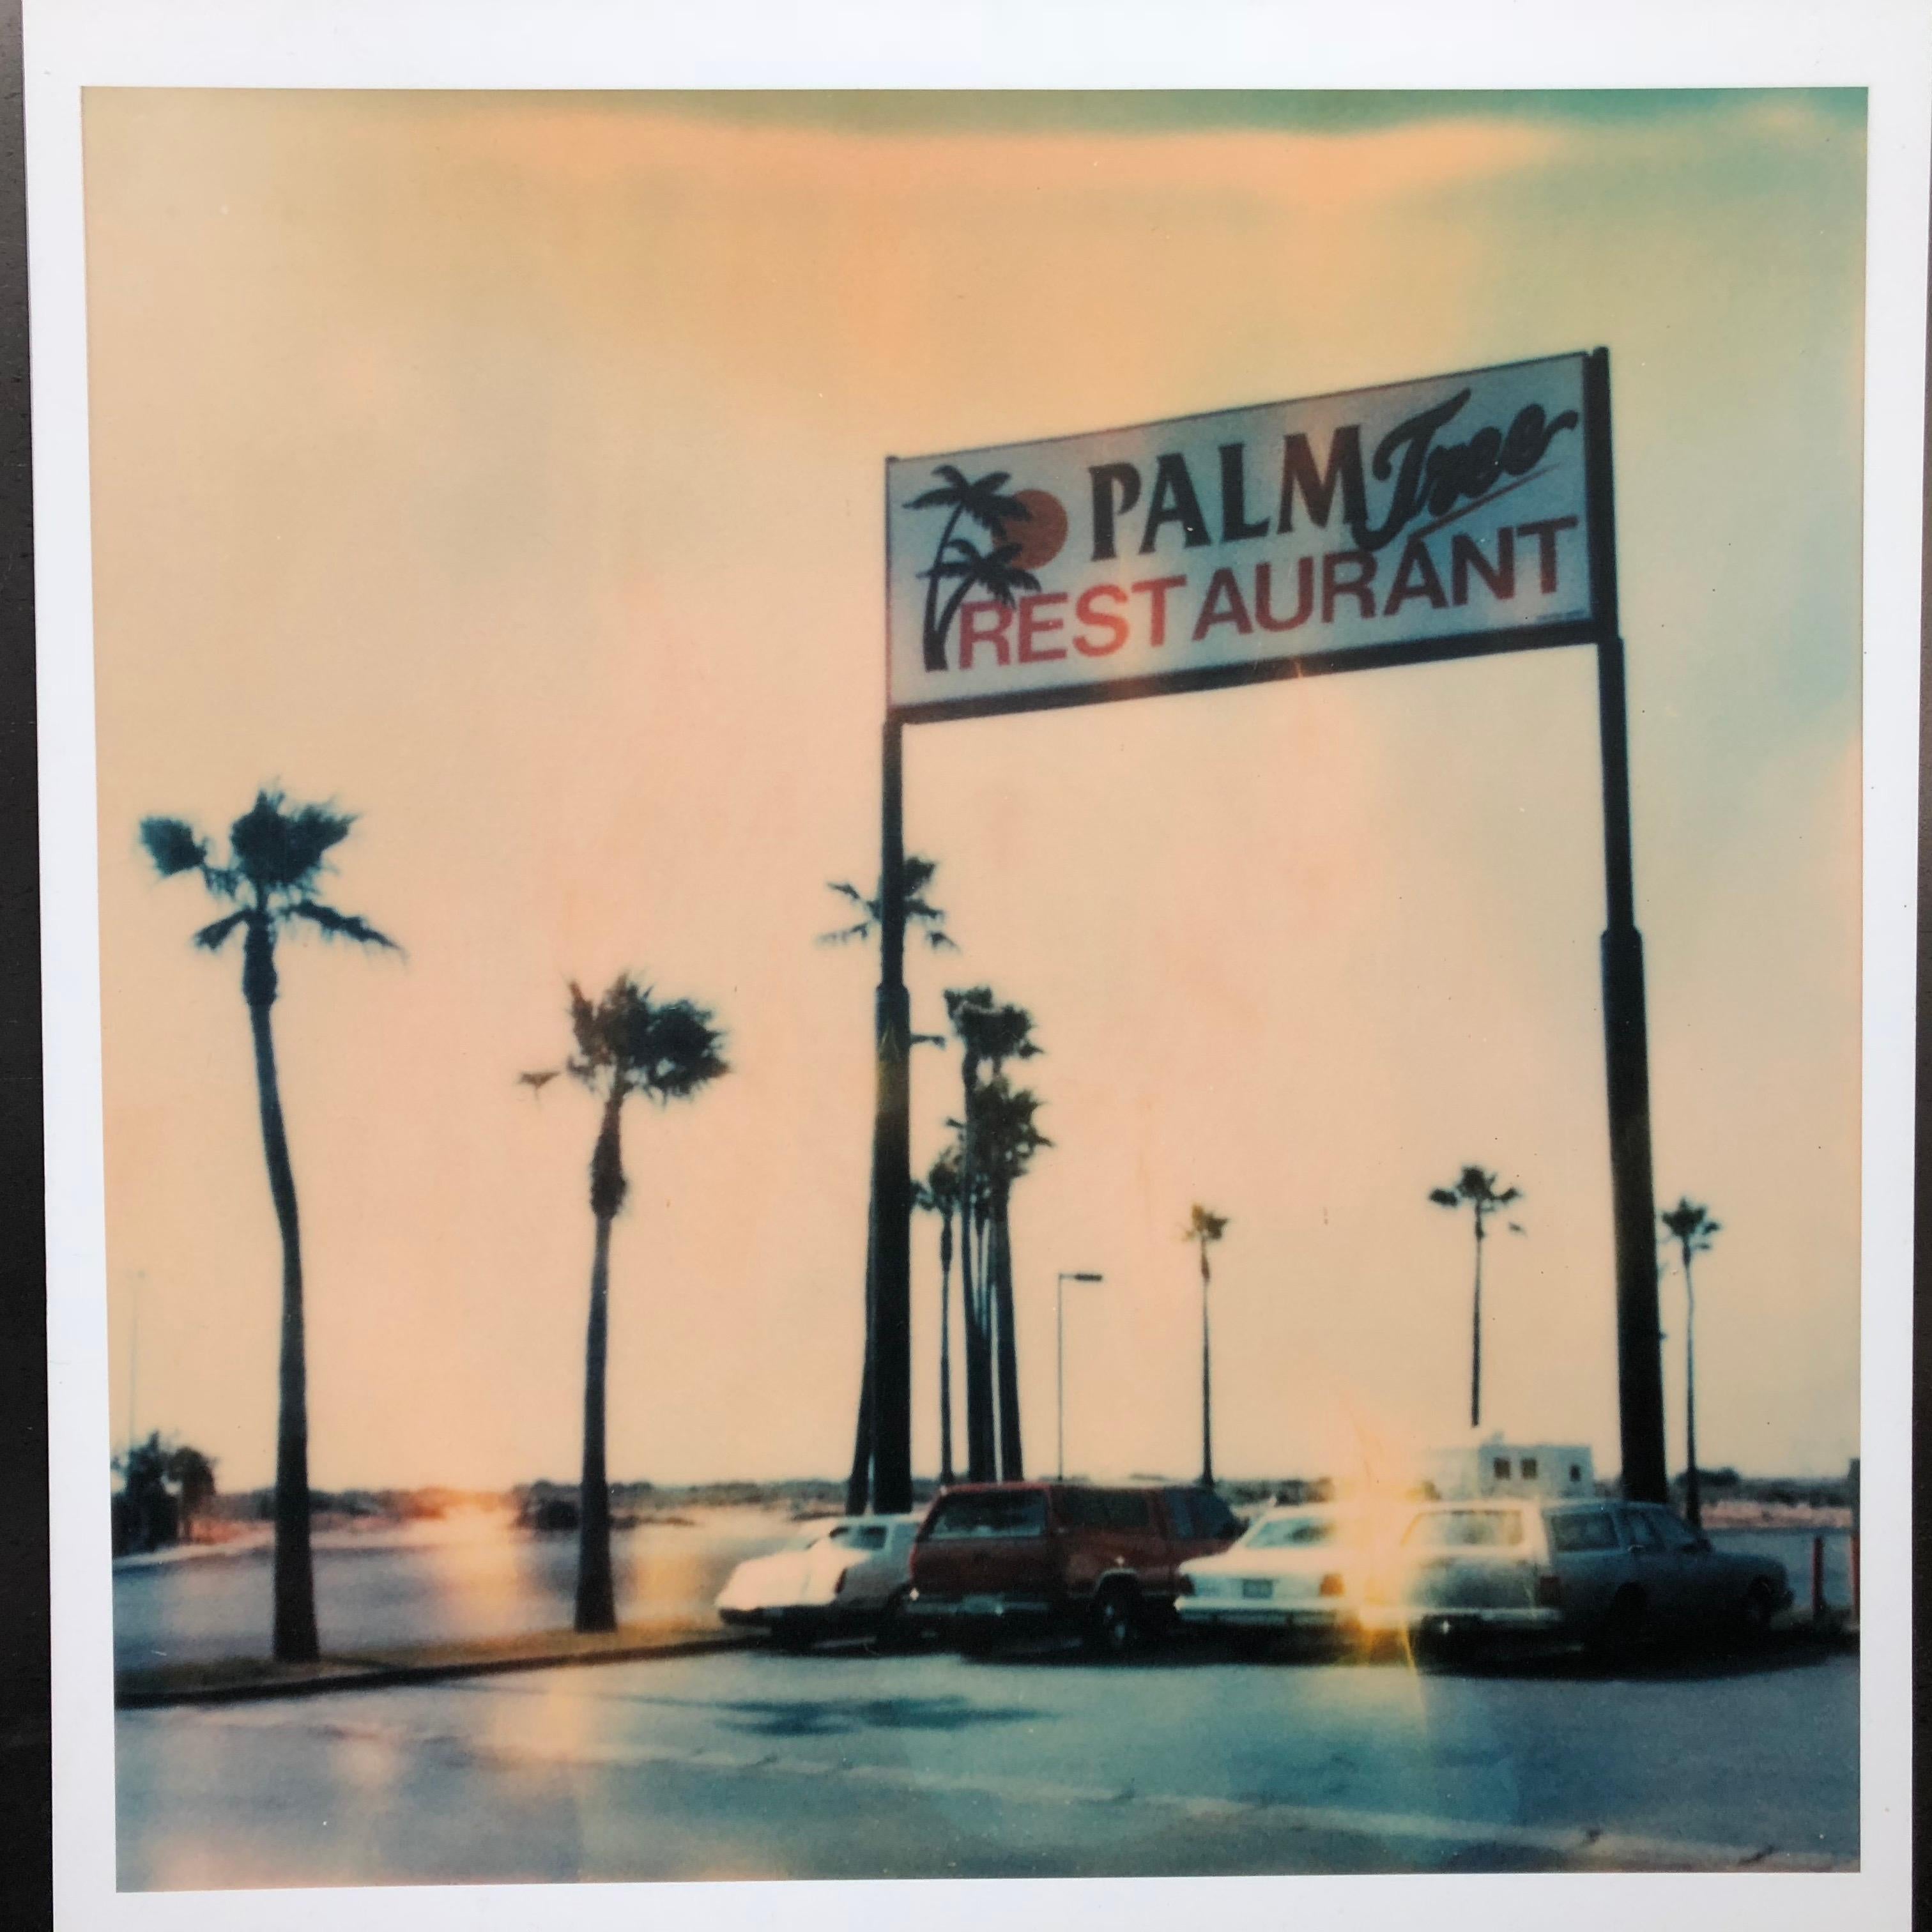 Palm Tree Restaurant (The Last Picture Show) - Photograph by Stefanie Schneider